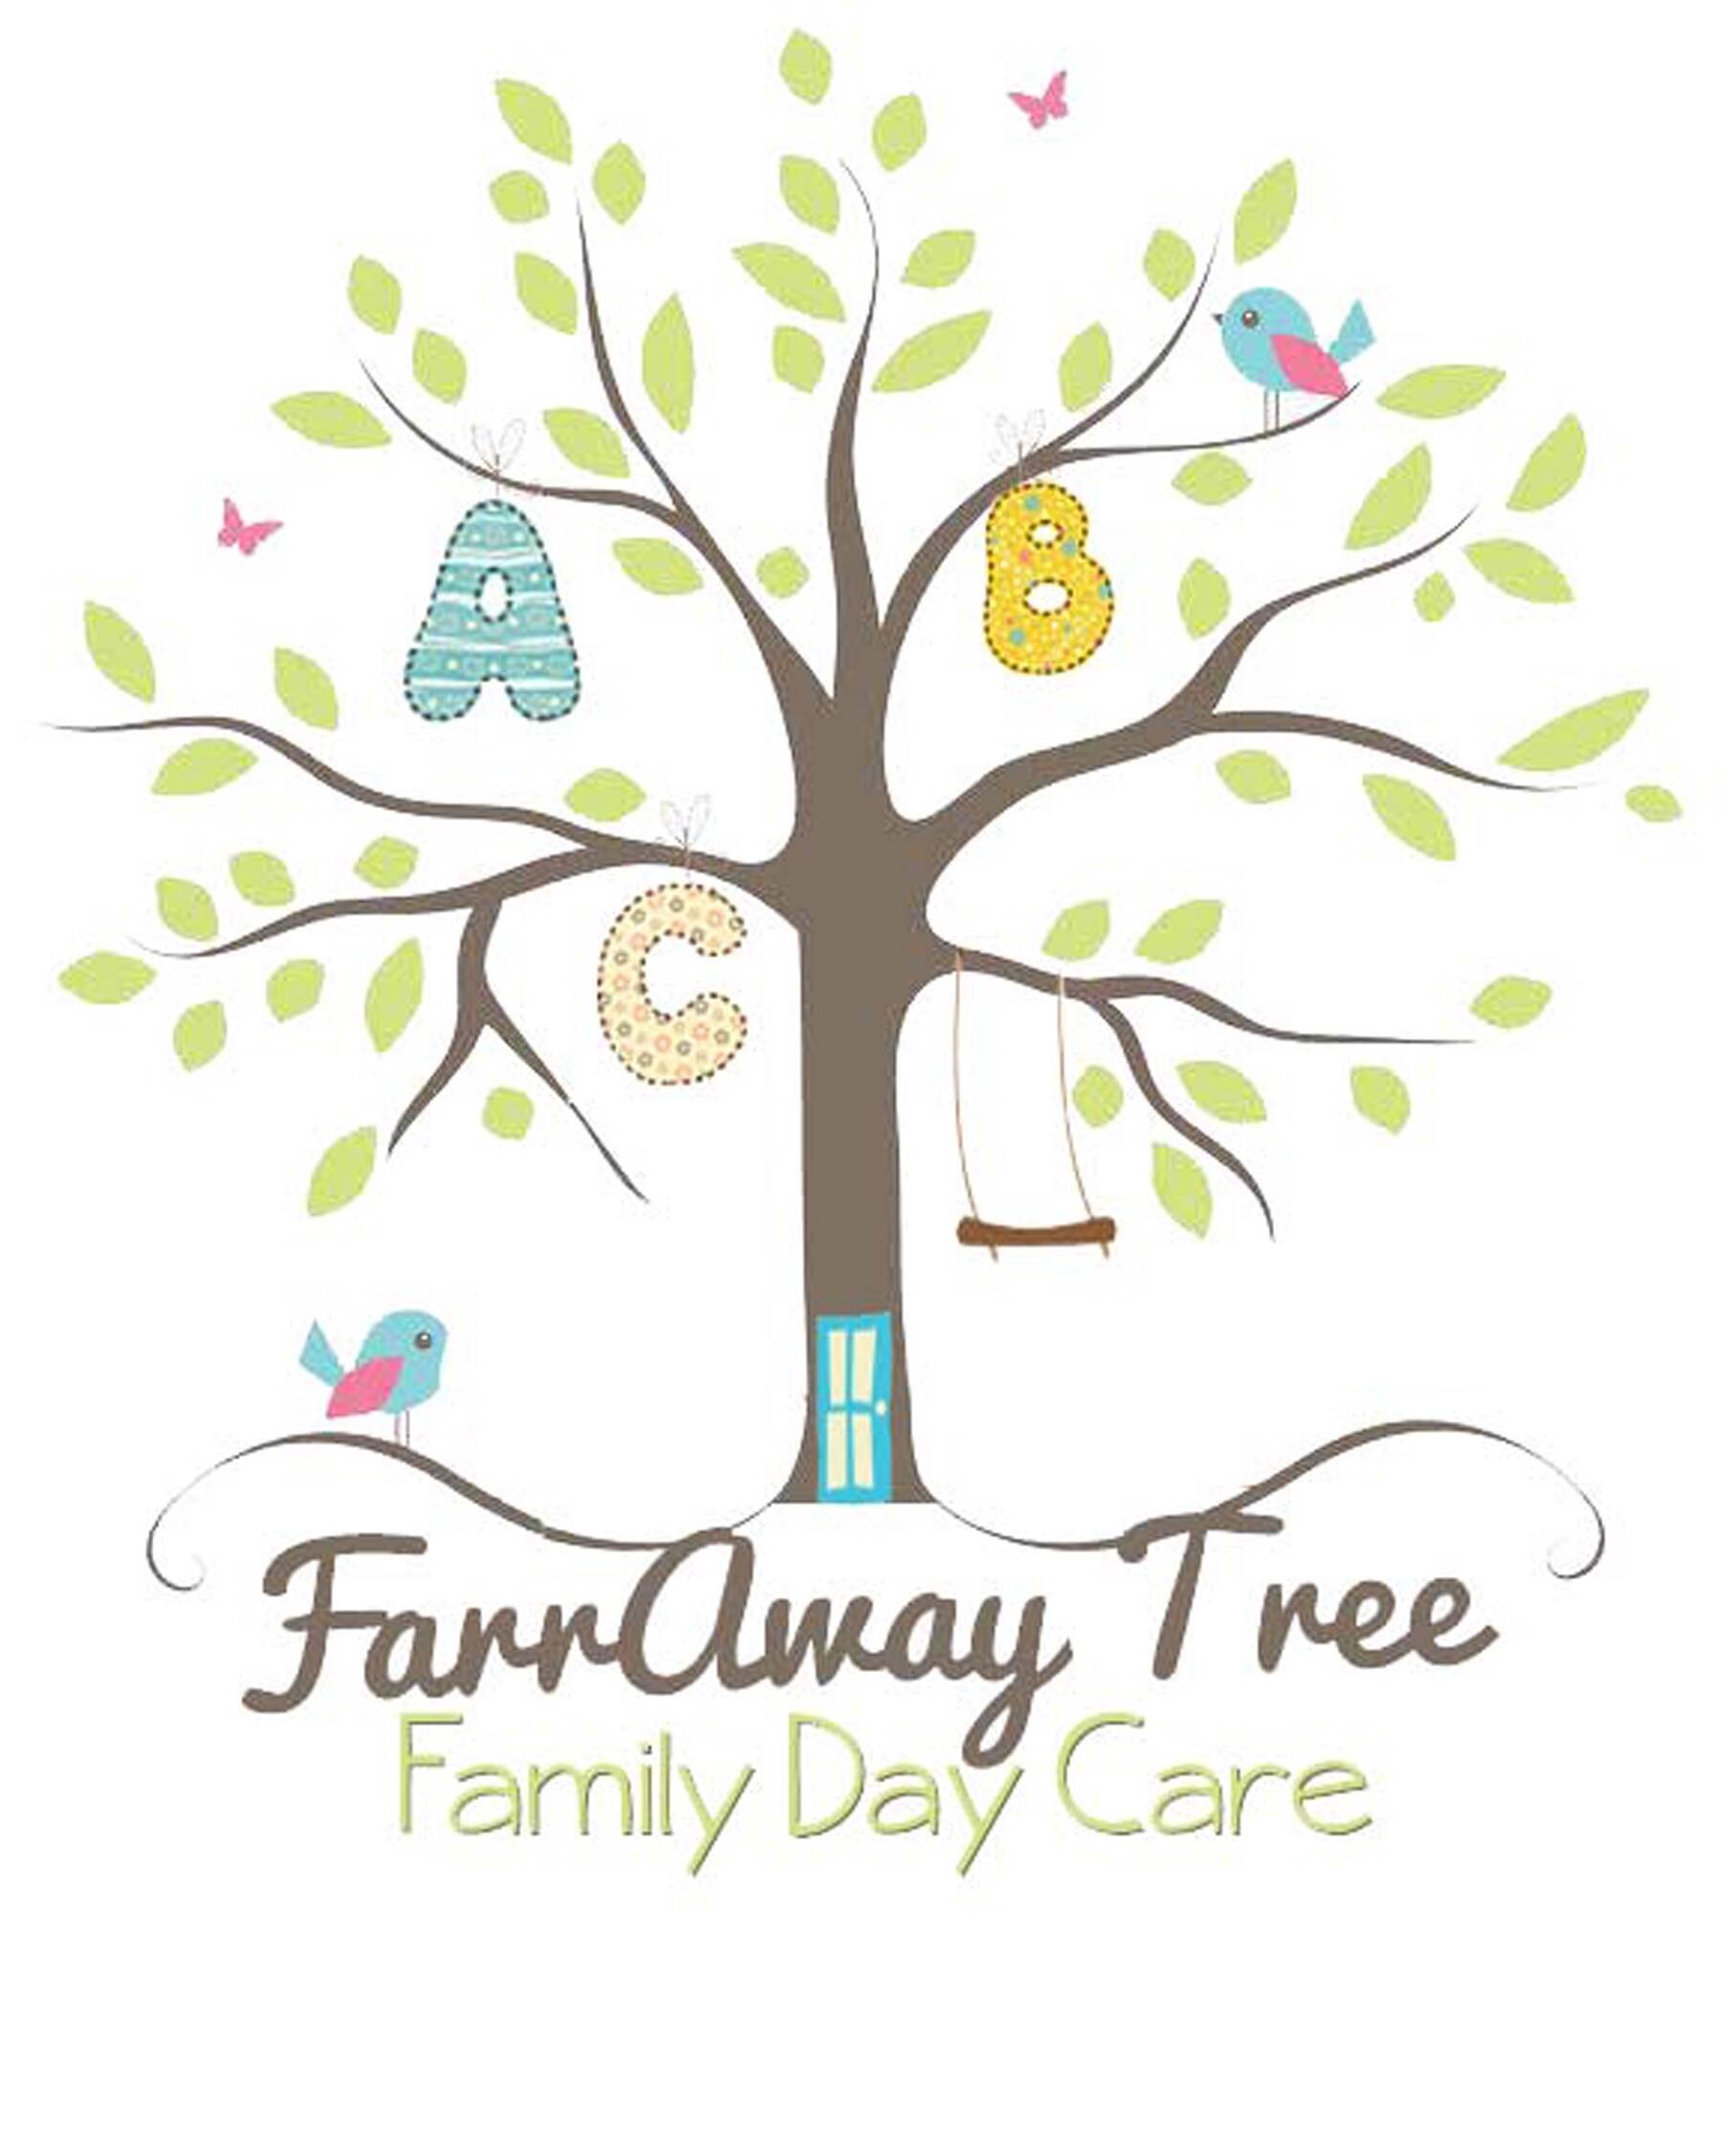 FarrAway Tree Family Day Care